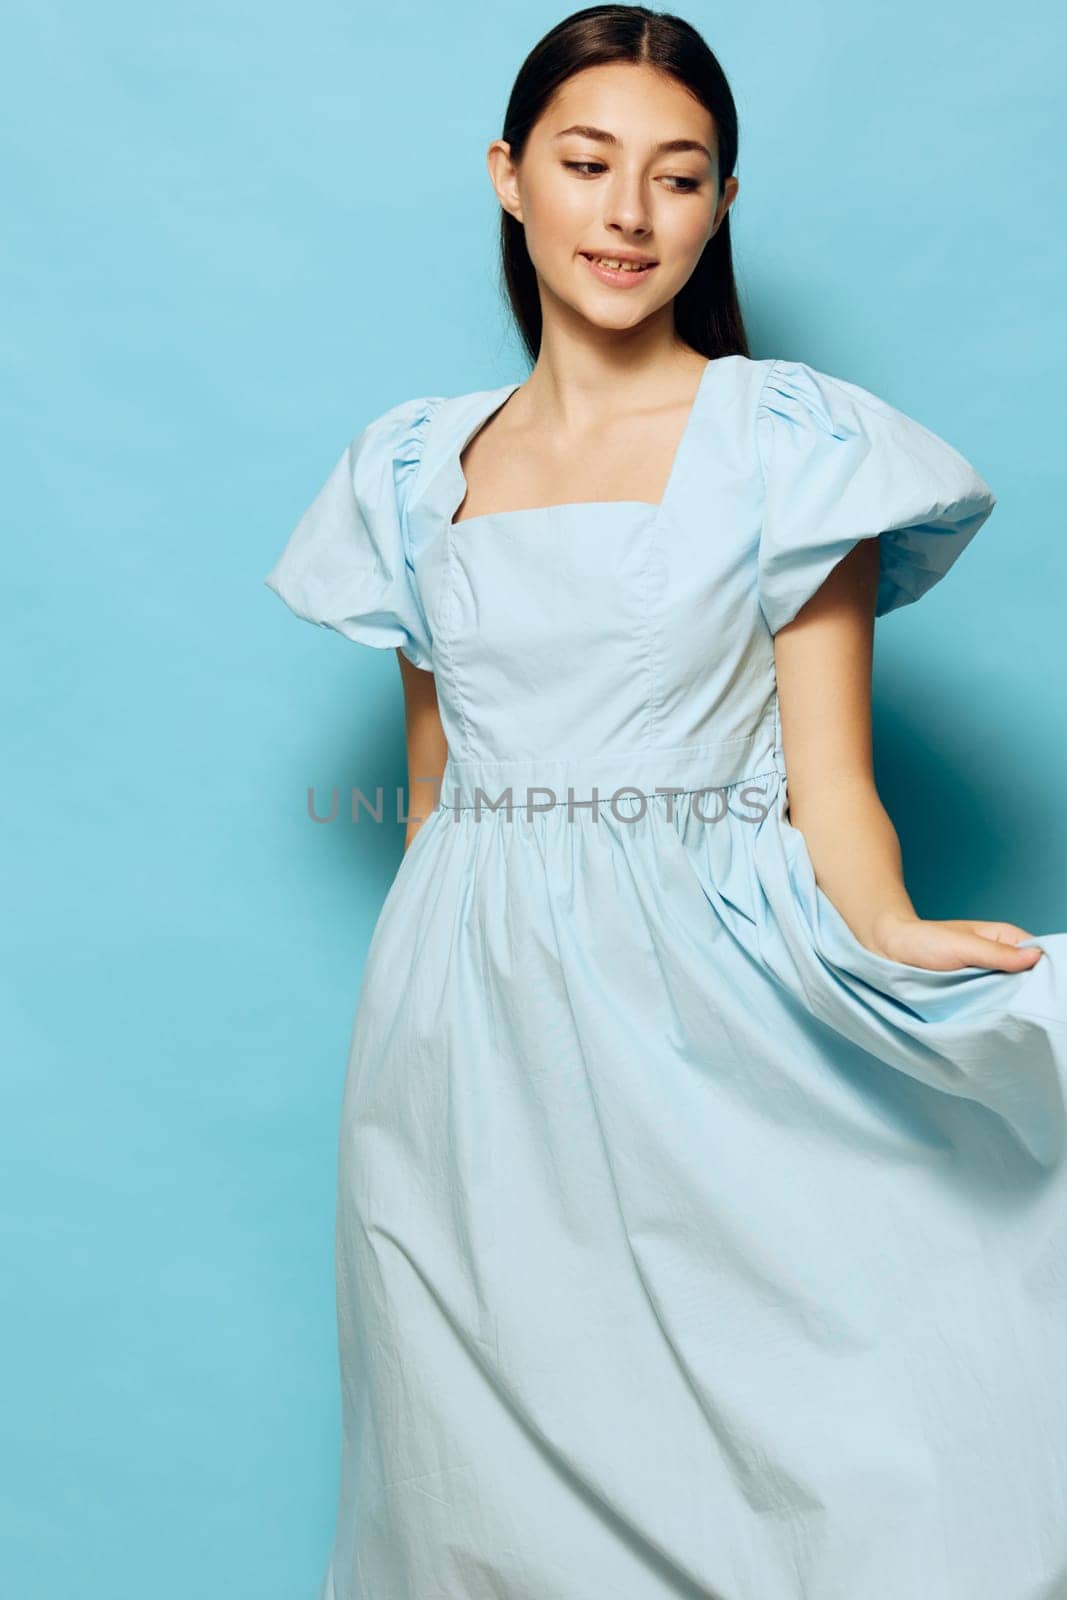 joy woman fashion young model summer studio style dress blue beautiful by SHOTPRIME